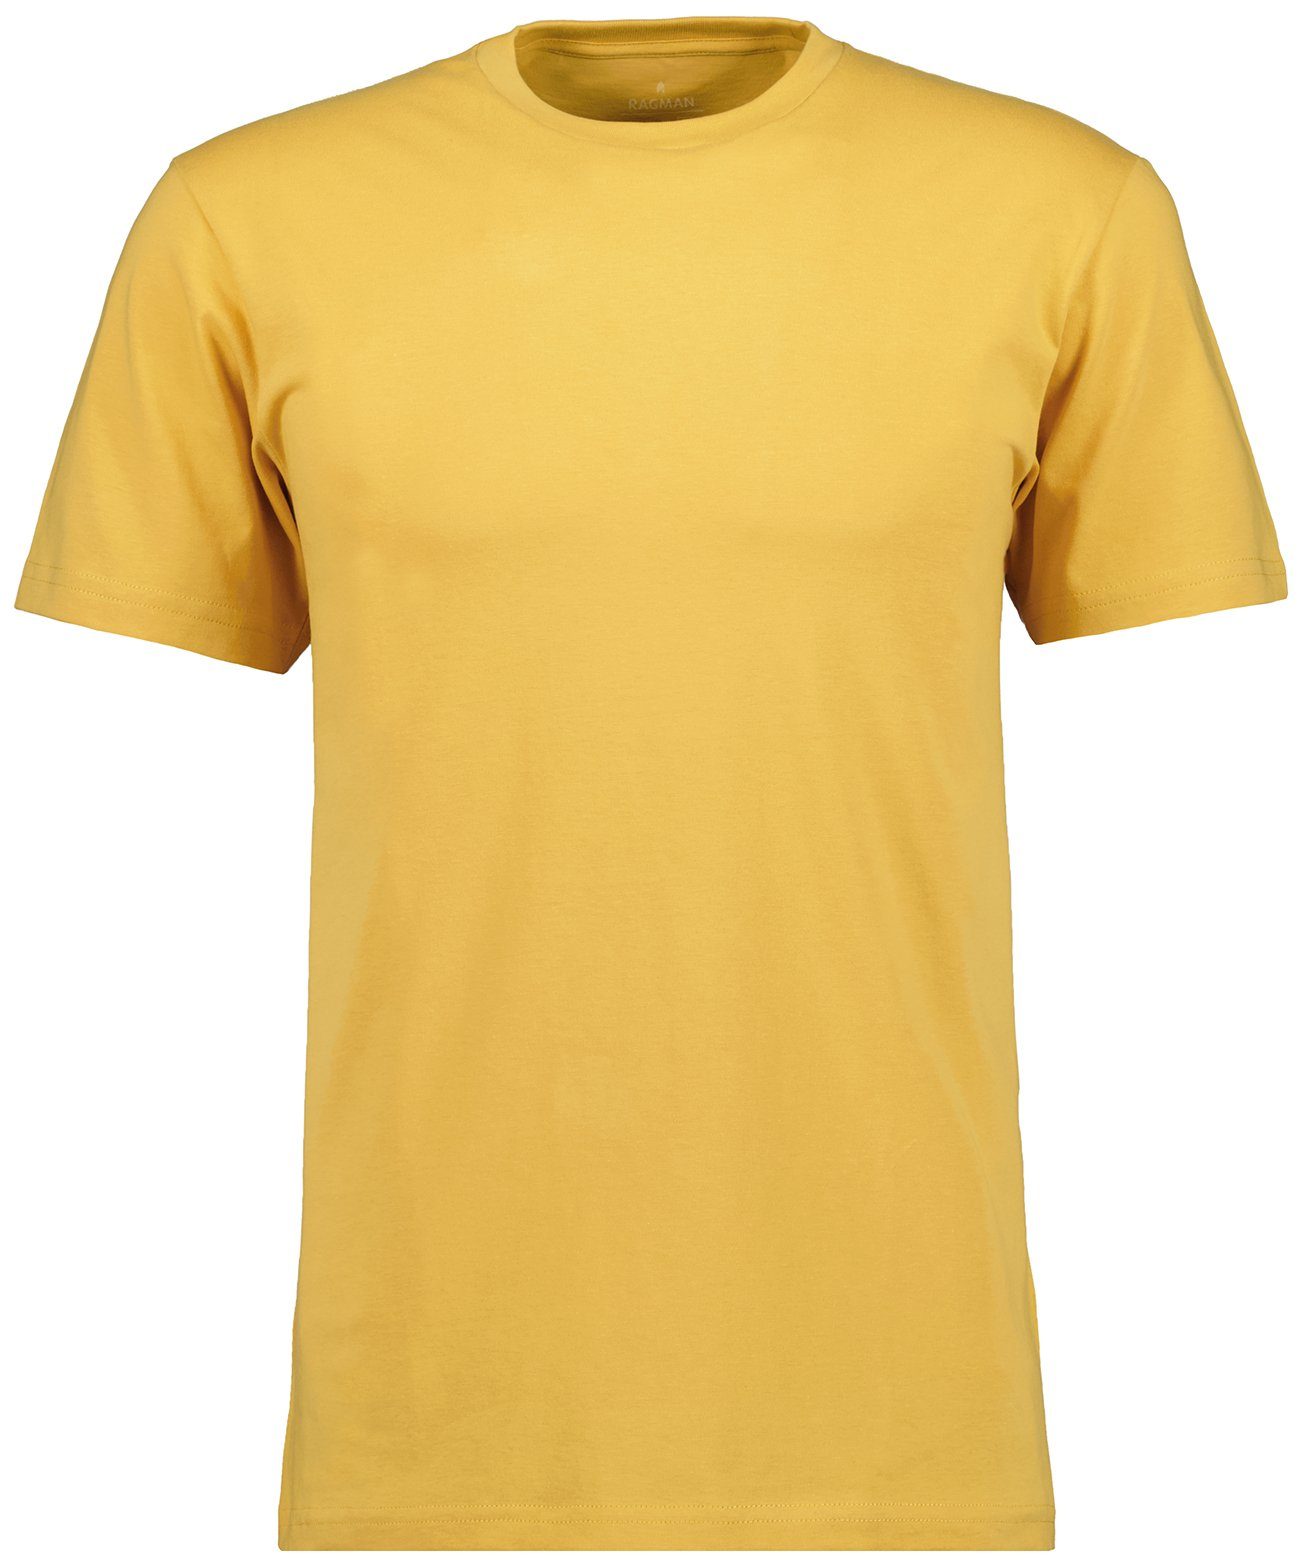 RAGMAN T-Shirt Orange-541